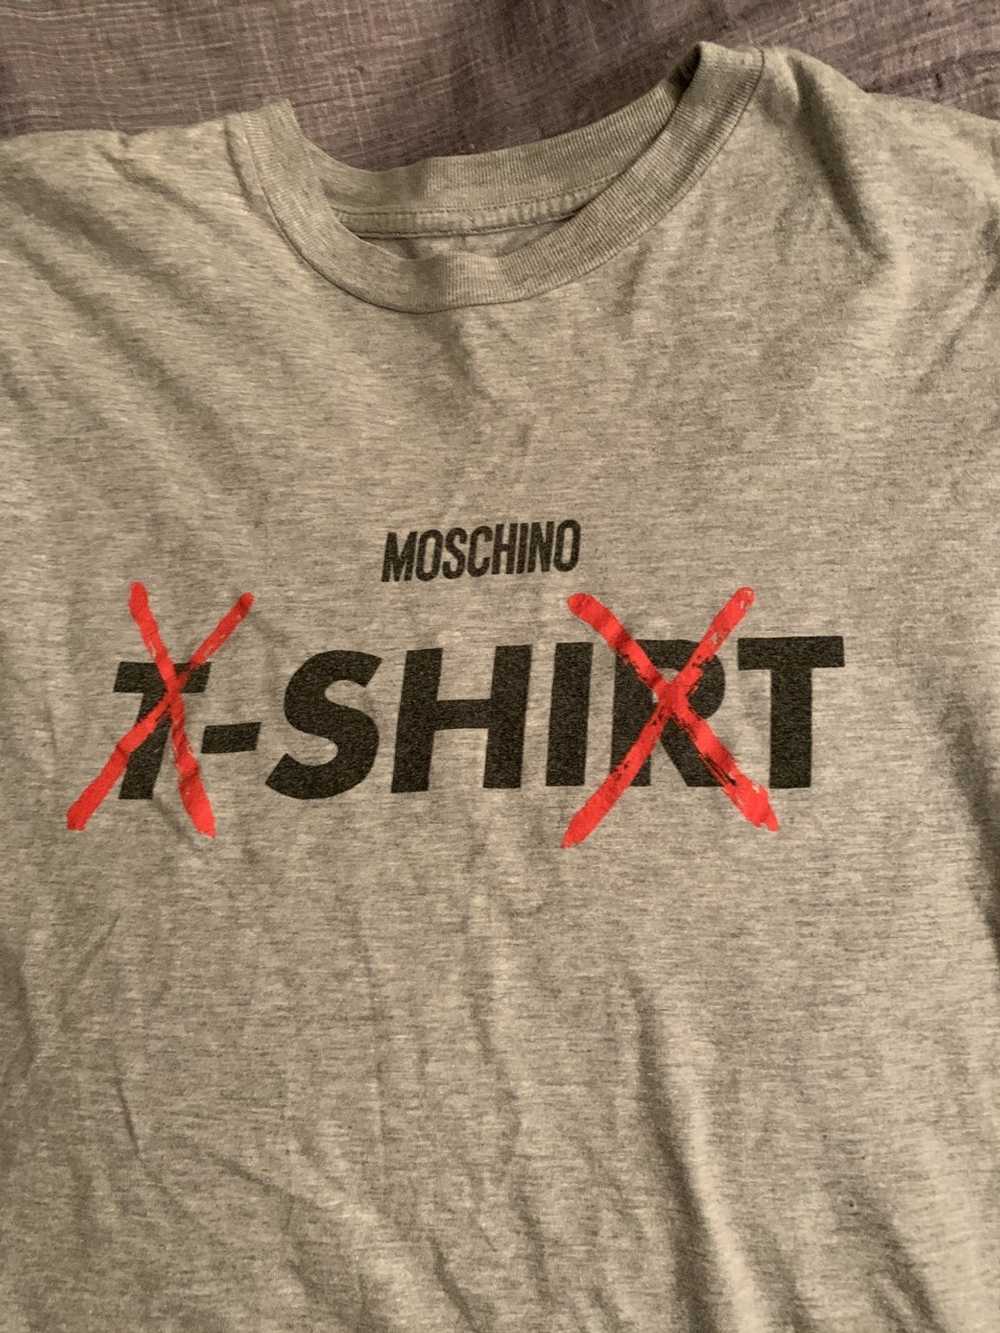 Moschino Rare Moschino Shit T shirt - image 2